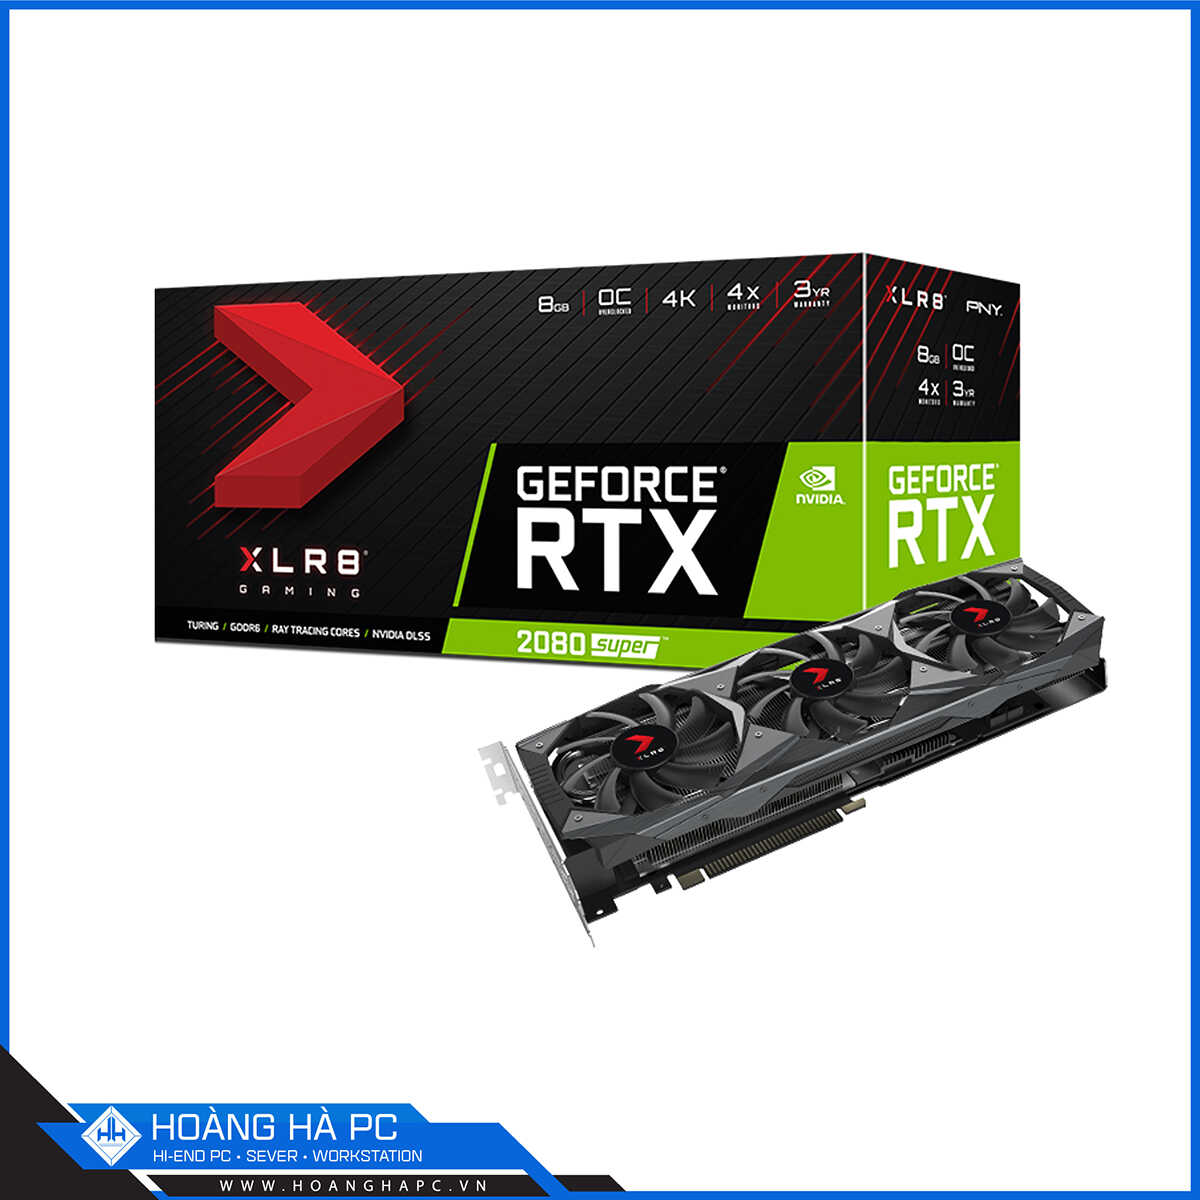 PNY GeForce RTX 2080 Super 8GB XLR8